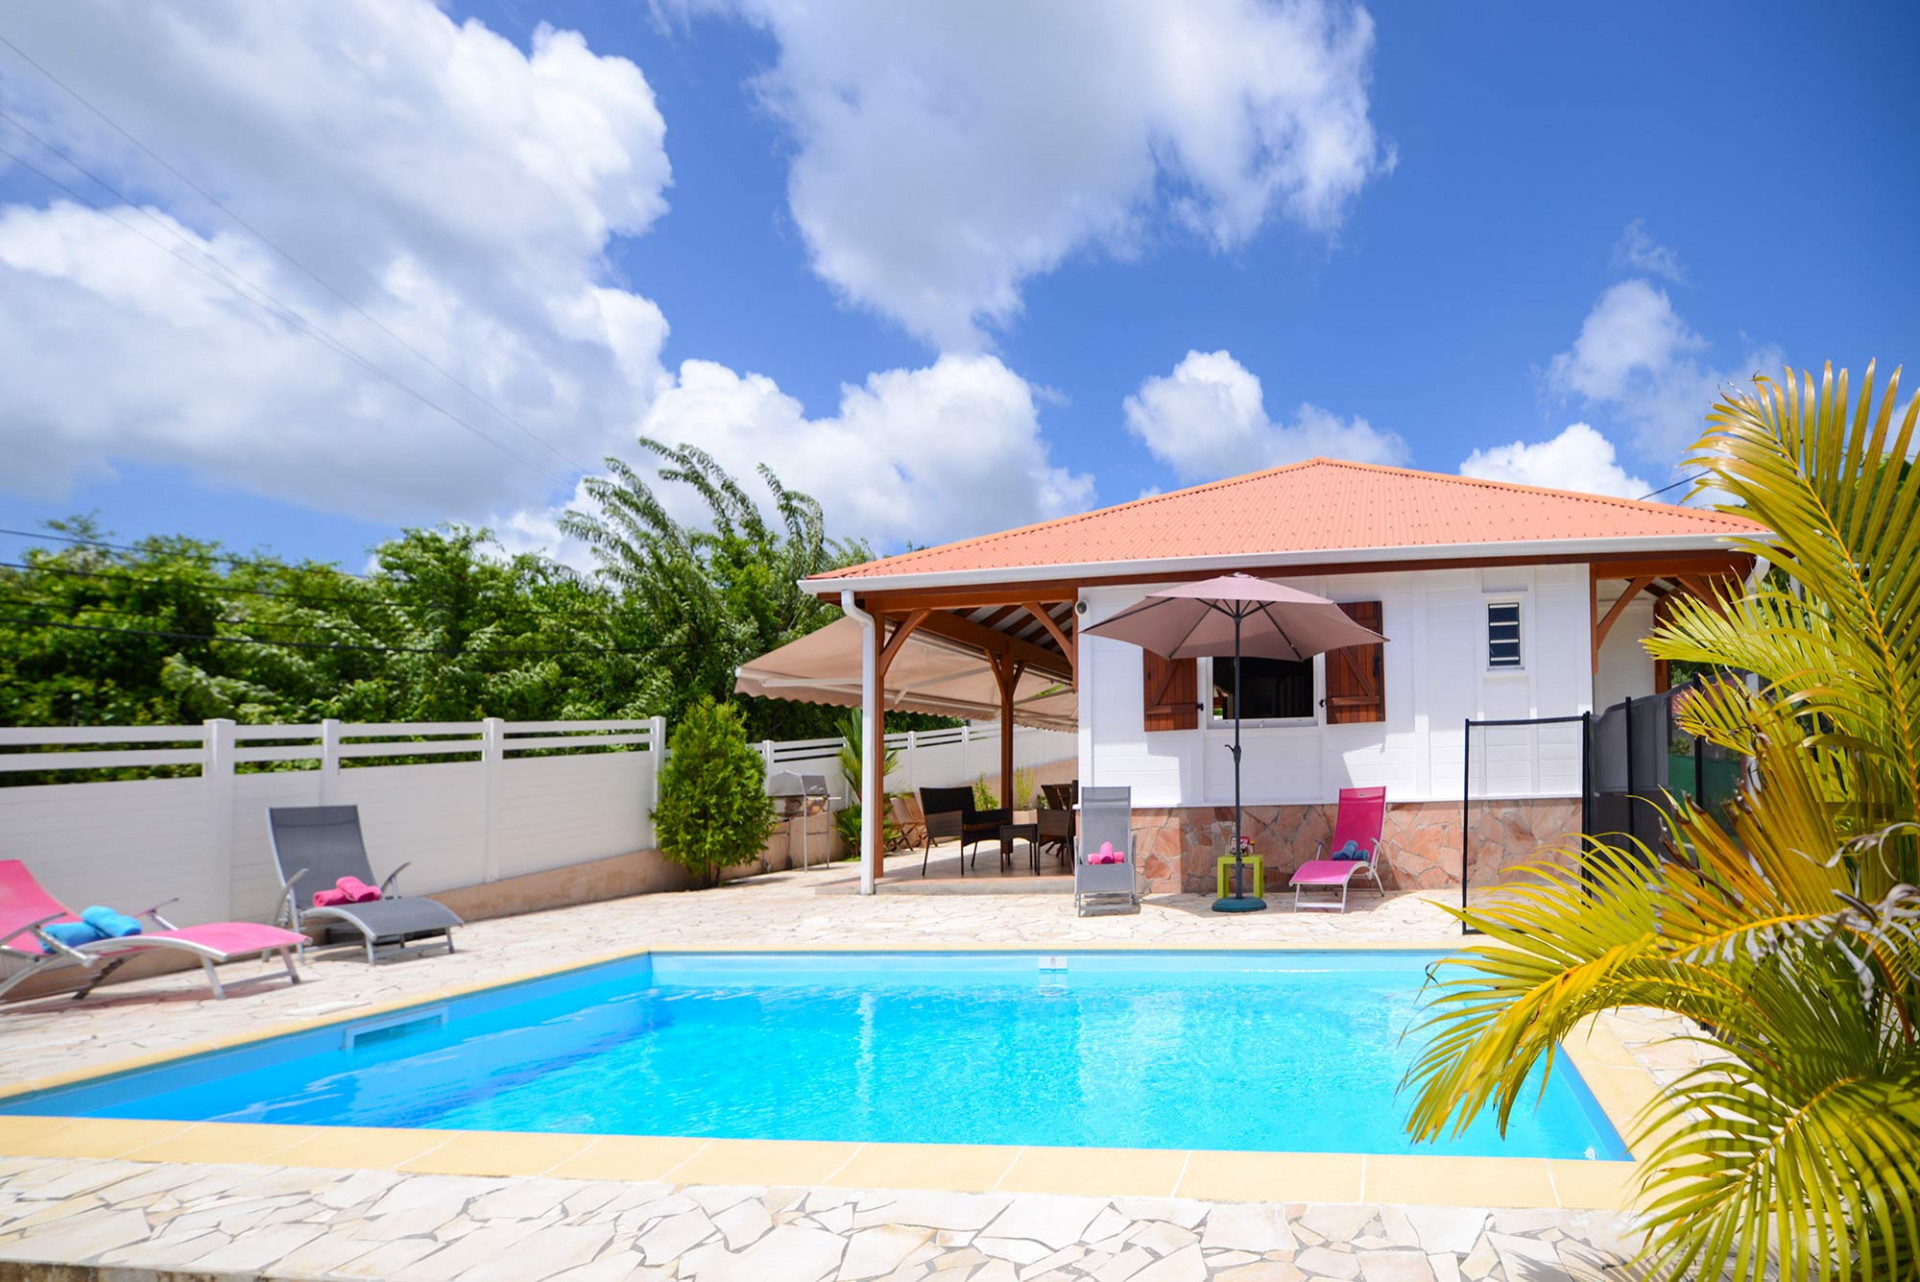 Villa SOHA Location Martinique le Diamant avec piscine et jardin - Bienvenue à la Villa Soha